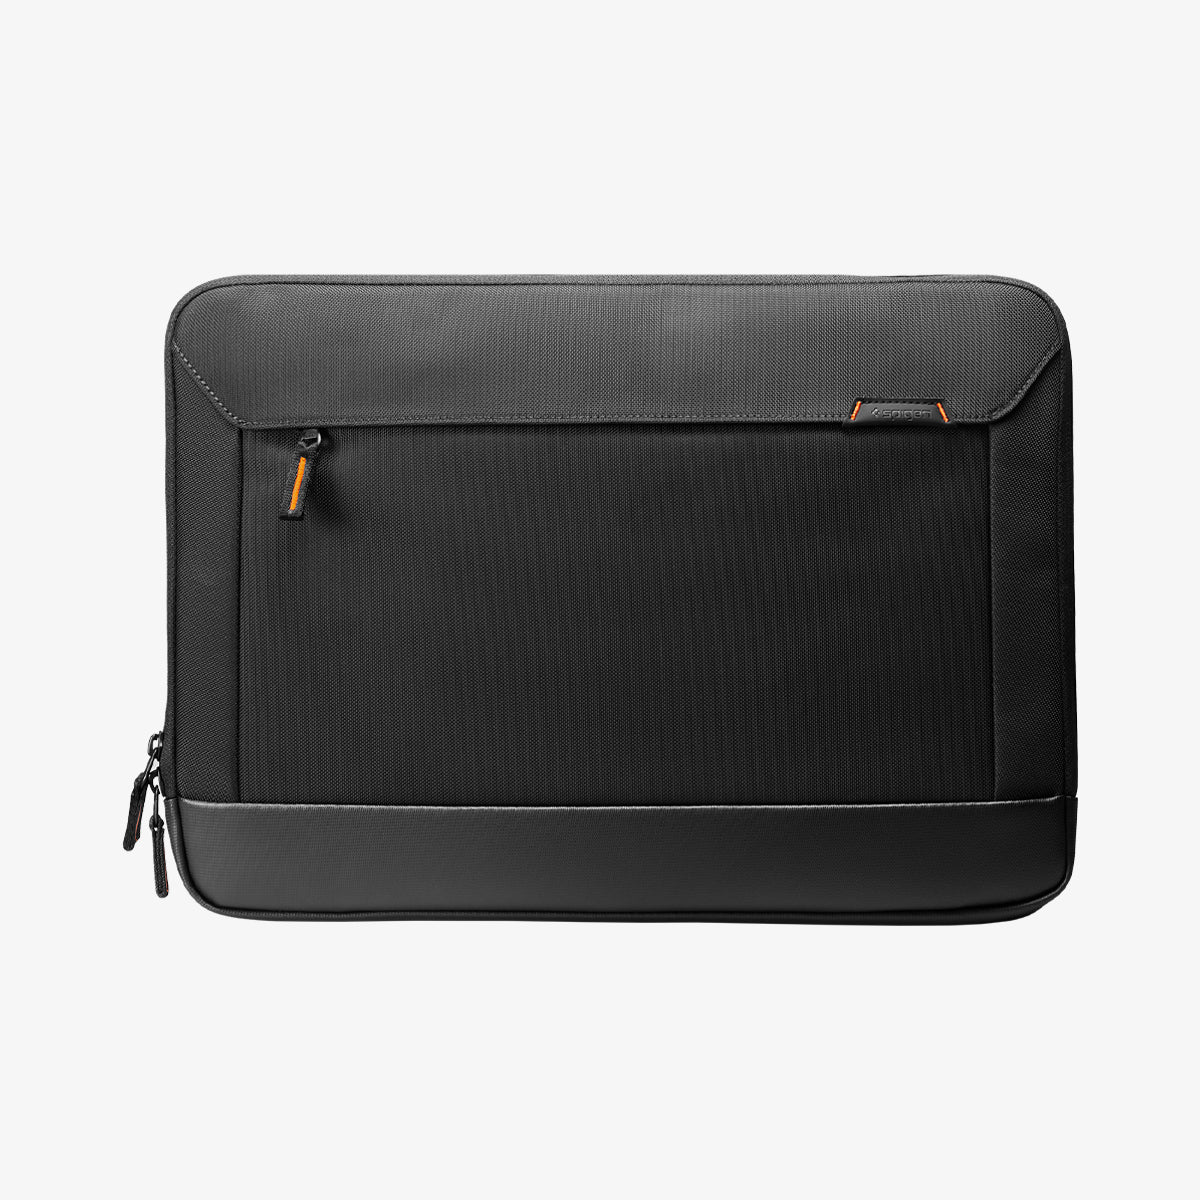 AFA05938 - KD100 16" Case Klasdan Laptop Pouch in black showing the front